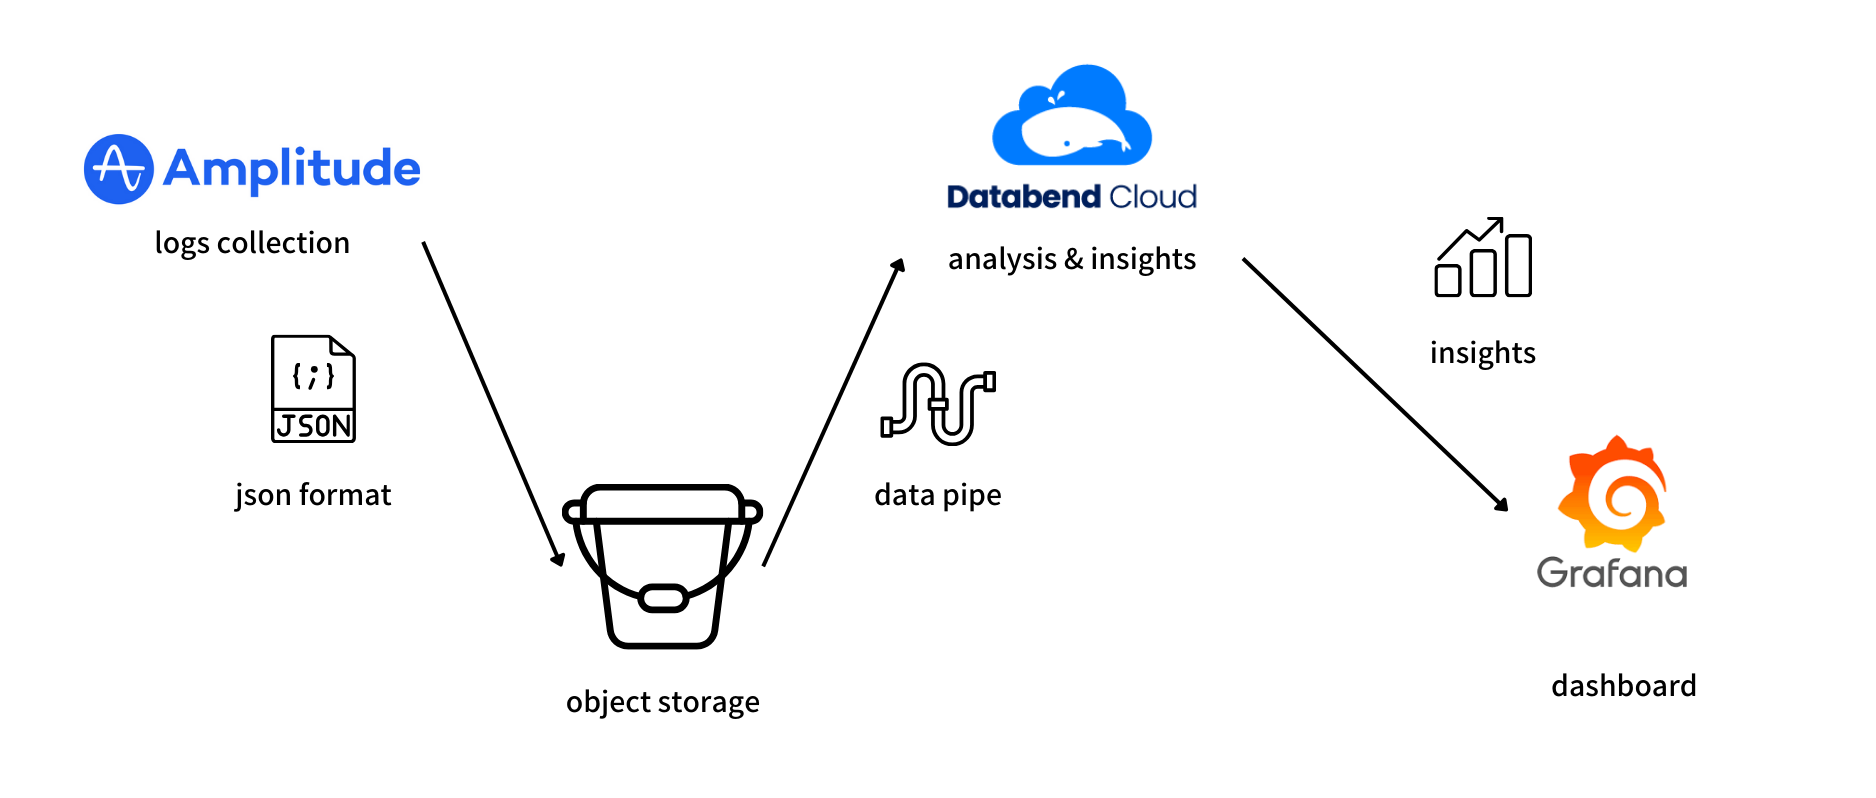 Databend Cloud AIGC Solution